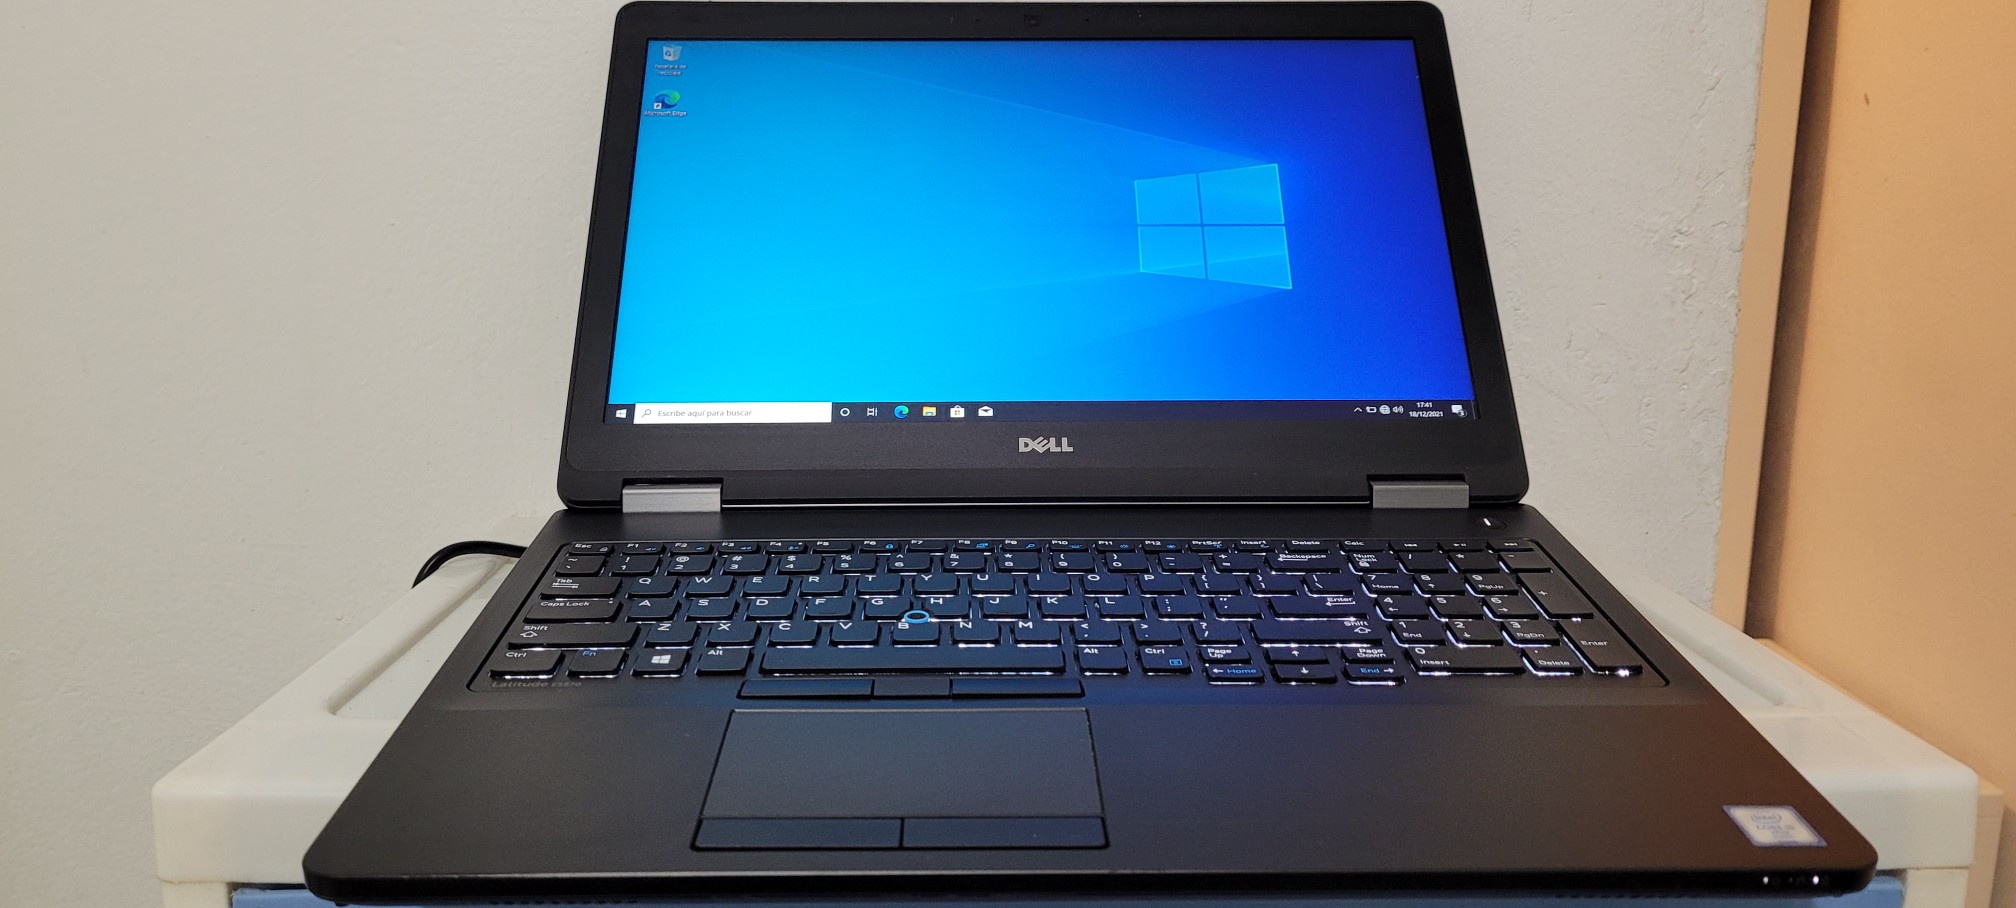 computadoras y laptops - Dell 5550 17 Pulg Core i7 Ram 8gb Disco 1tb hdmi 0